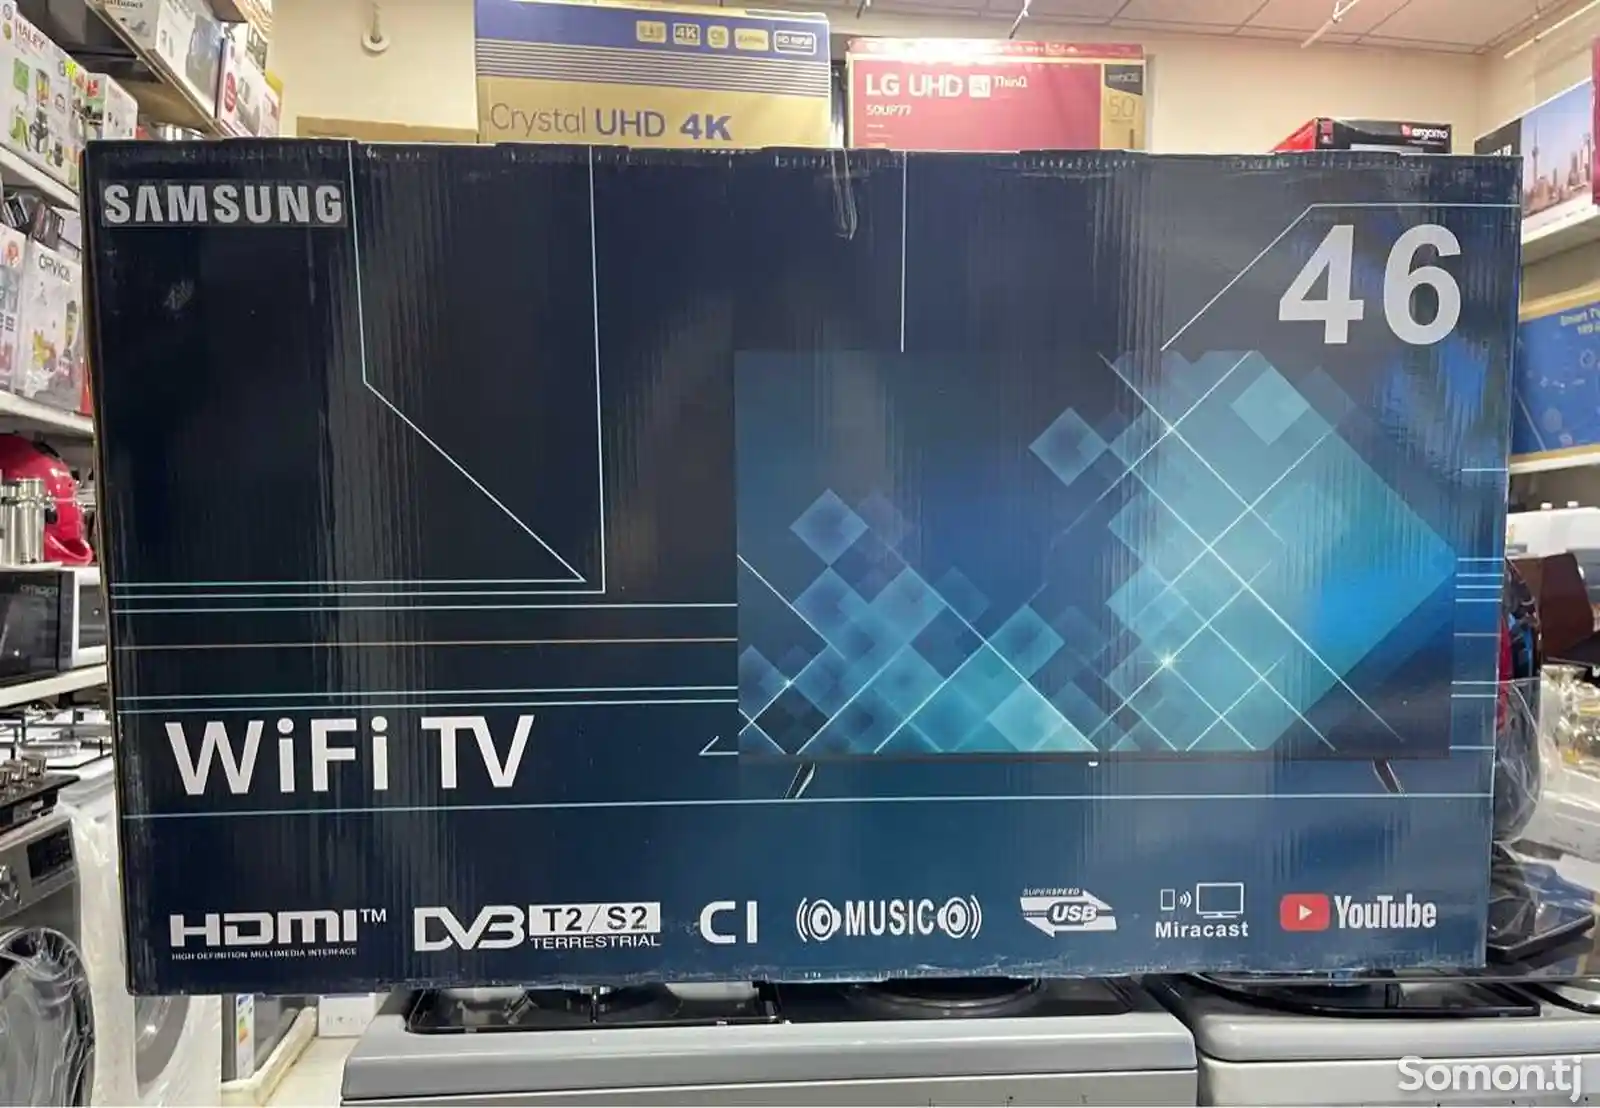 Телевизор-1